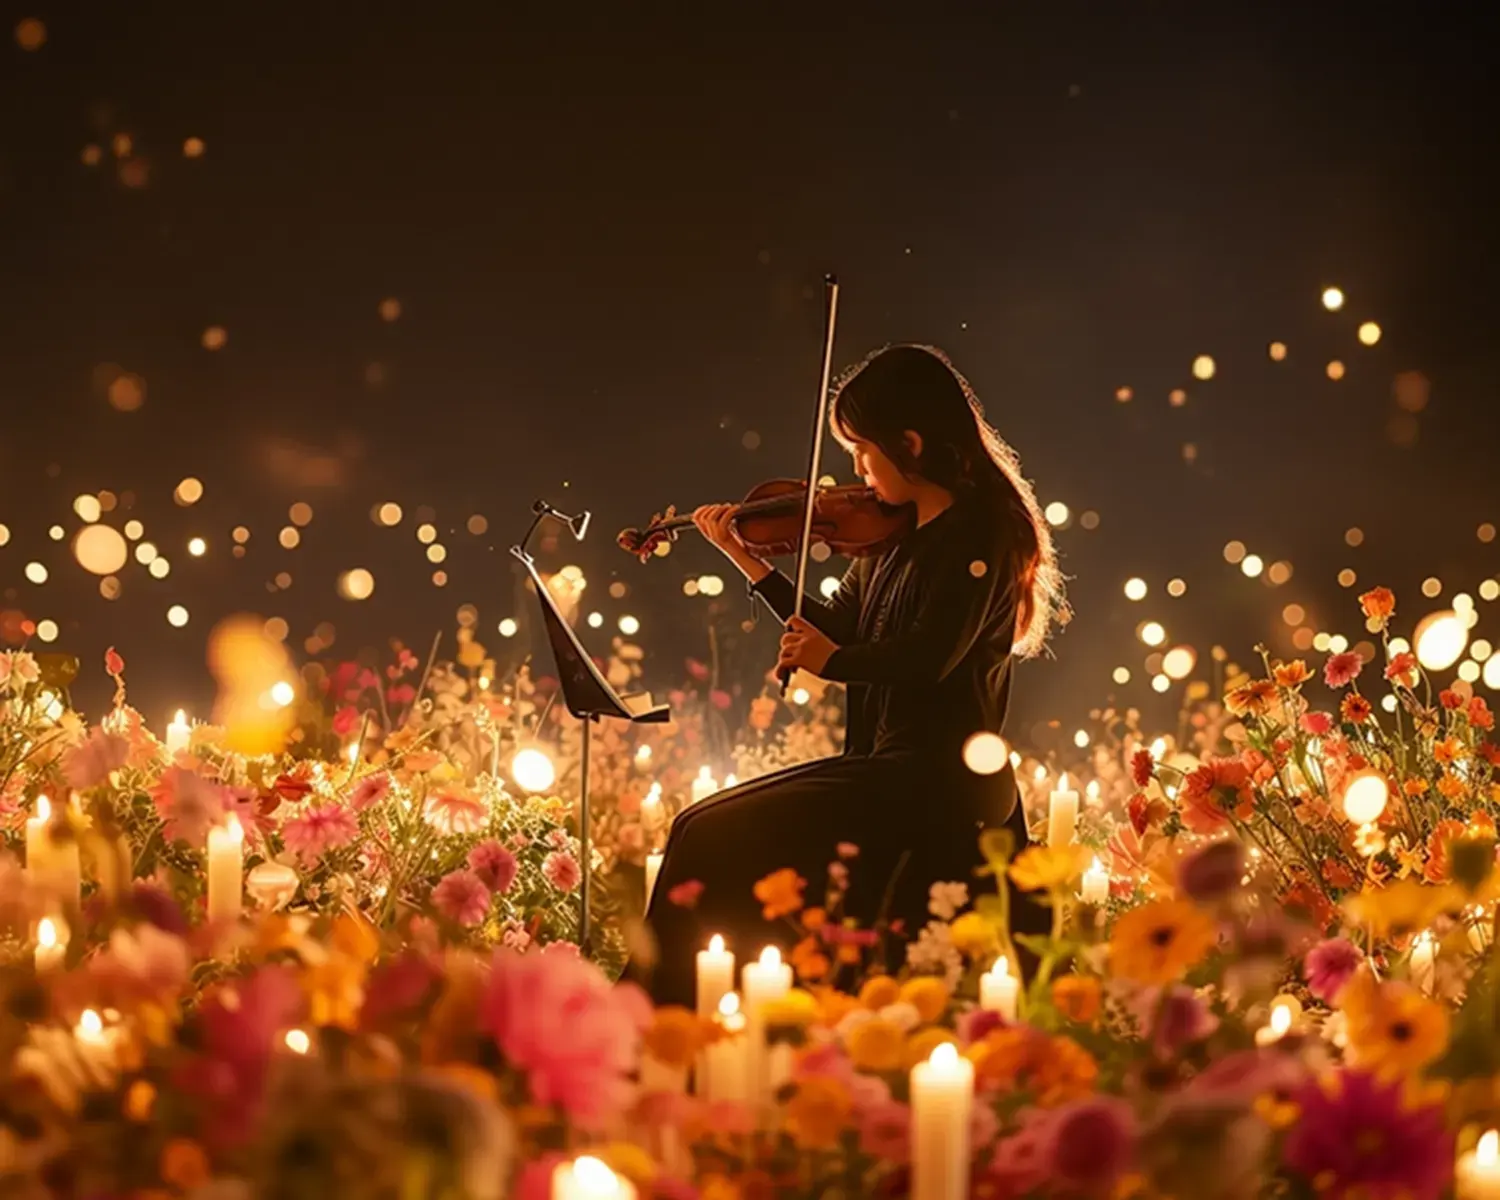 Candlelight Spring - Klassische Frühlingskonzerte bei Candlelight